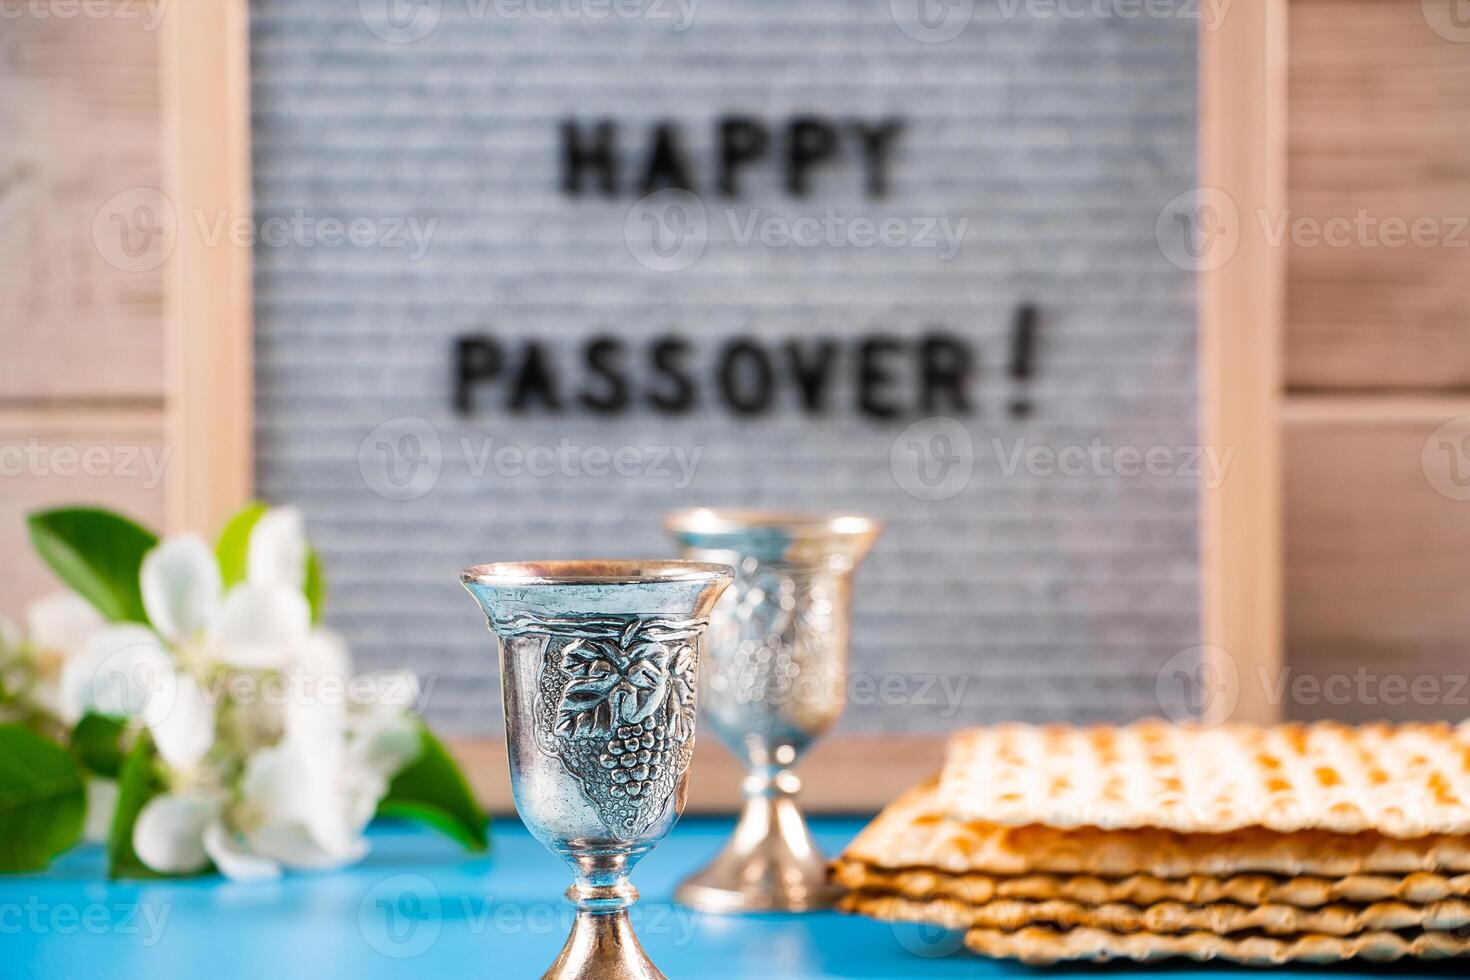 Happy Passover. Metal wine glasses and traditional Jewish matzo bread. photo